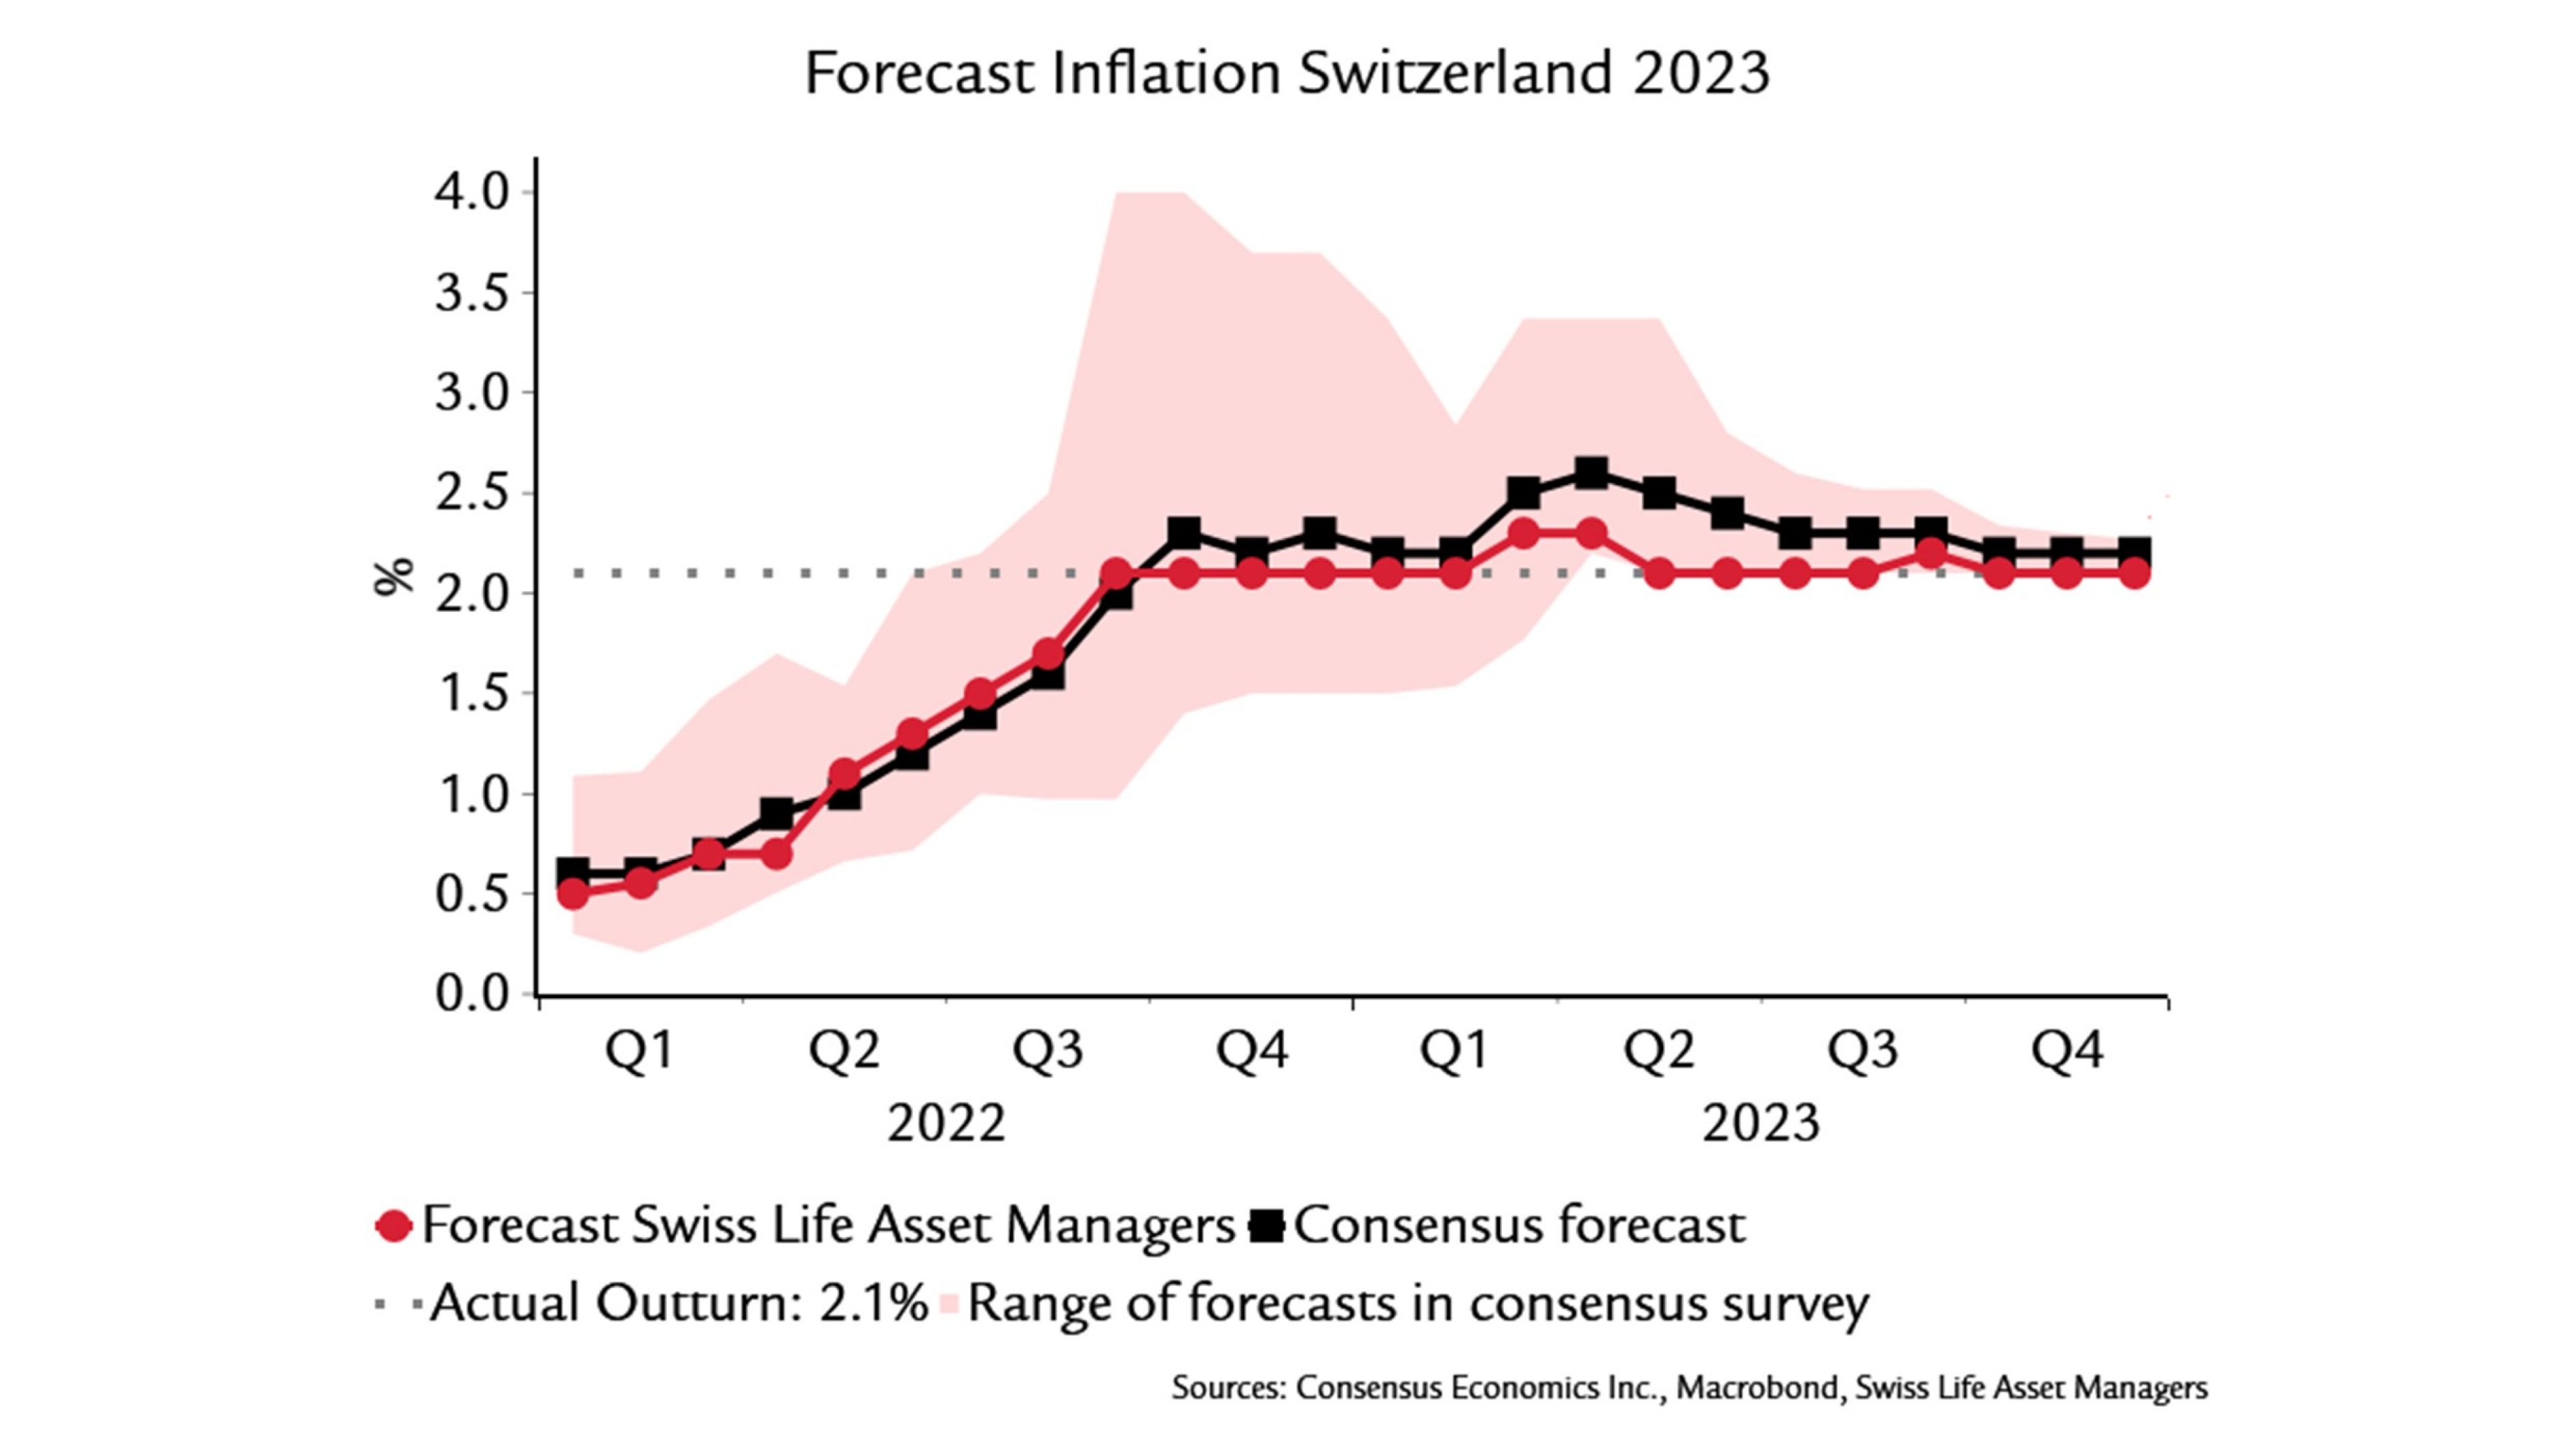 graphic shows Forecast Inflation Switzerland 2023